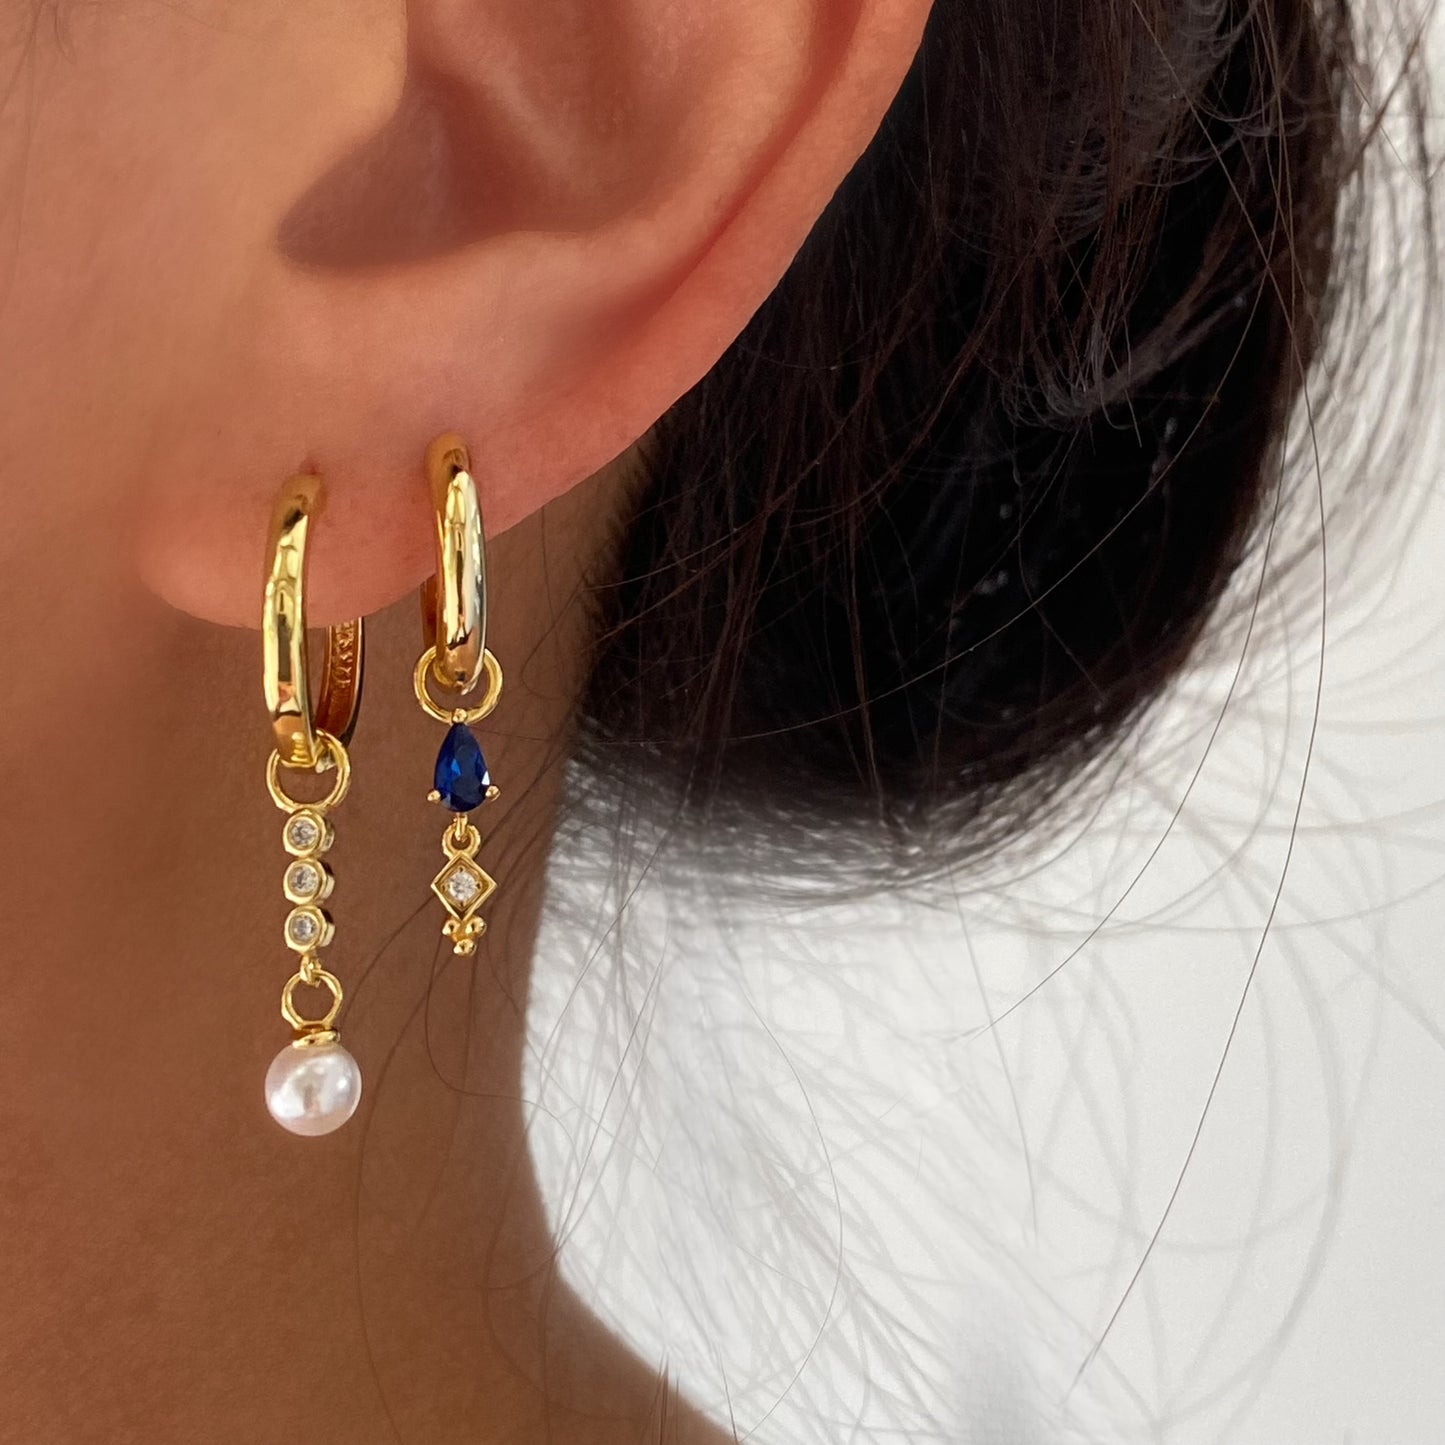 Sapphire Cubic Drop Earrings with 925 Sterling Silver, Blue earrings